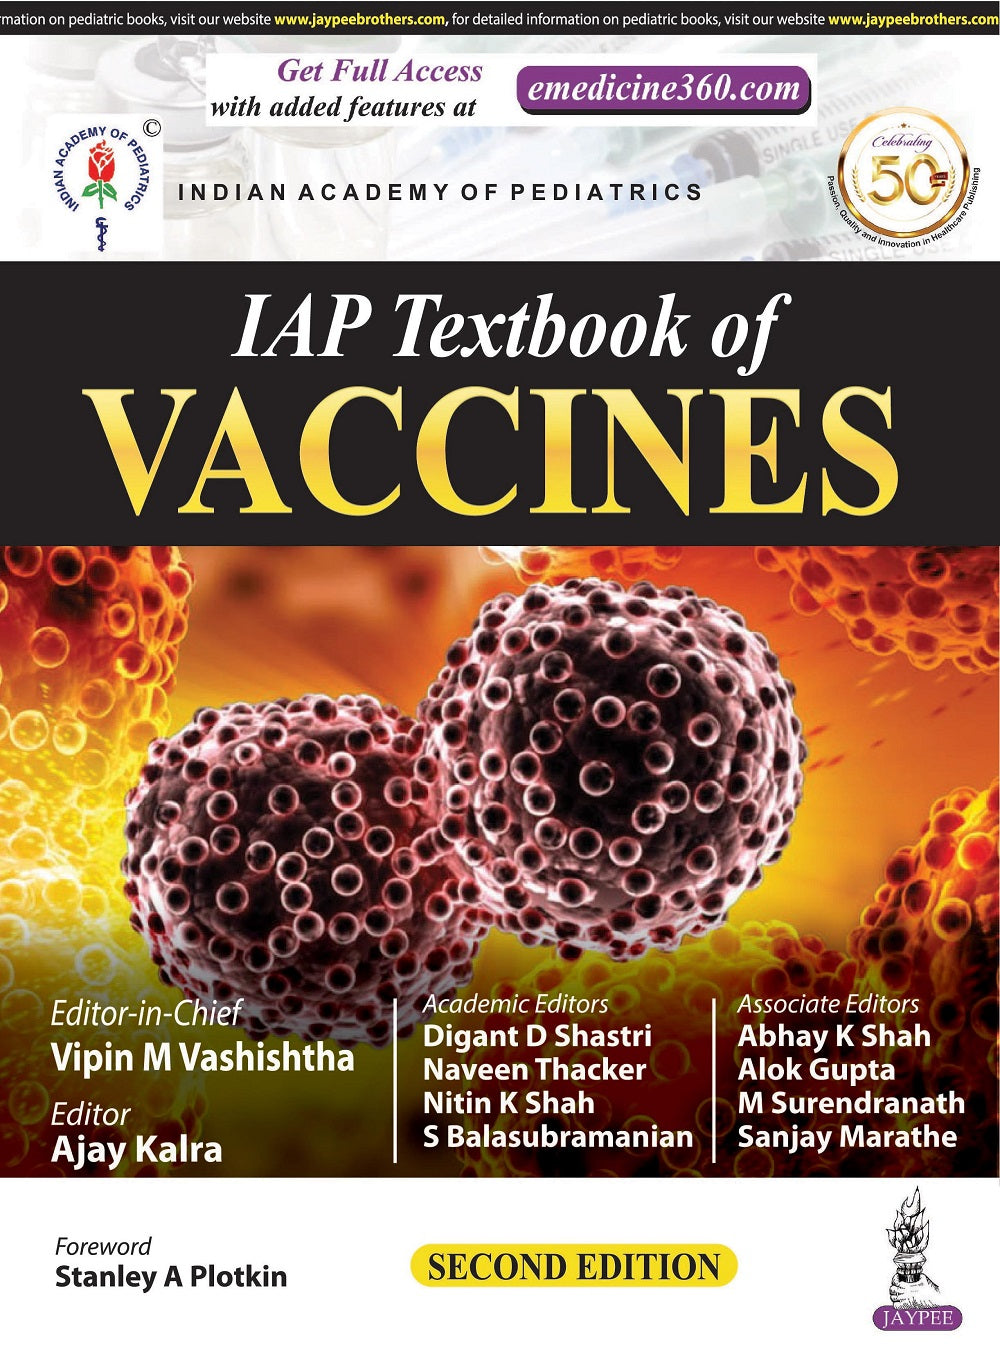 IAP TEXTBOOK OF VACCINES,2/E,VIPIN M VASHISHTHA